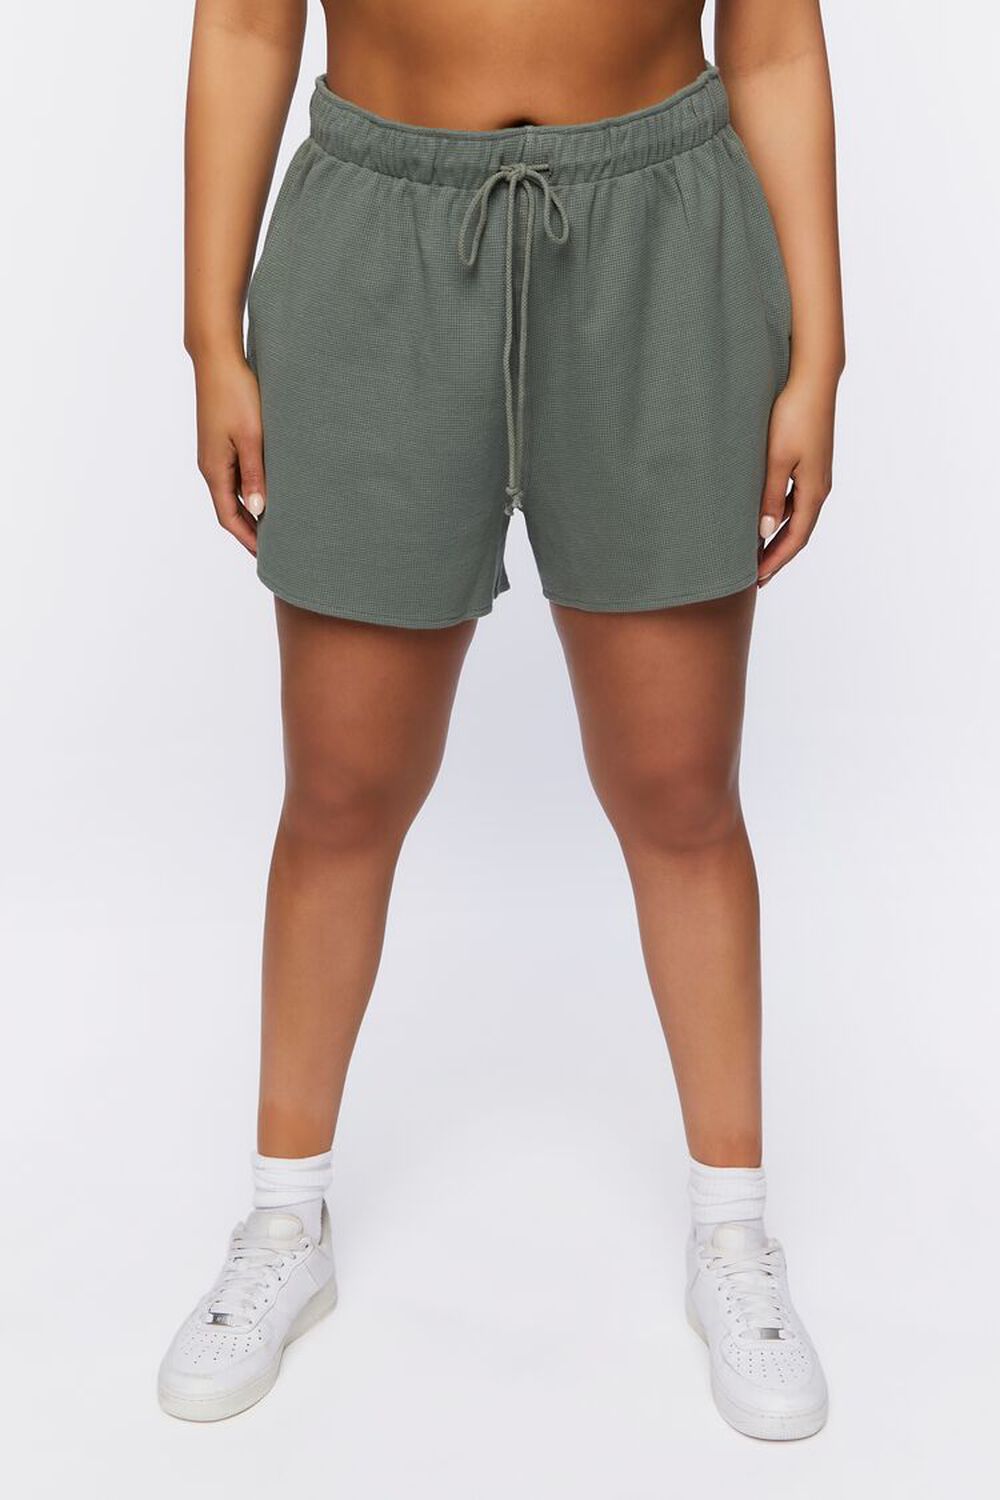 TEA Plus Size Pull-On Drawstring Shorts, image 2